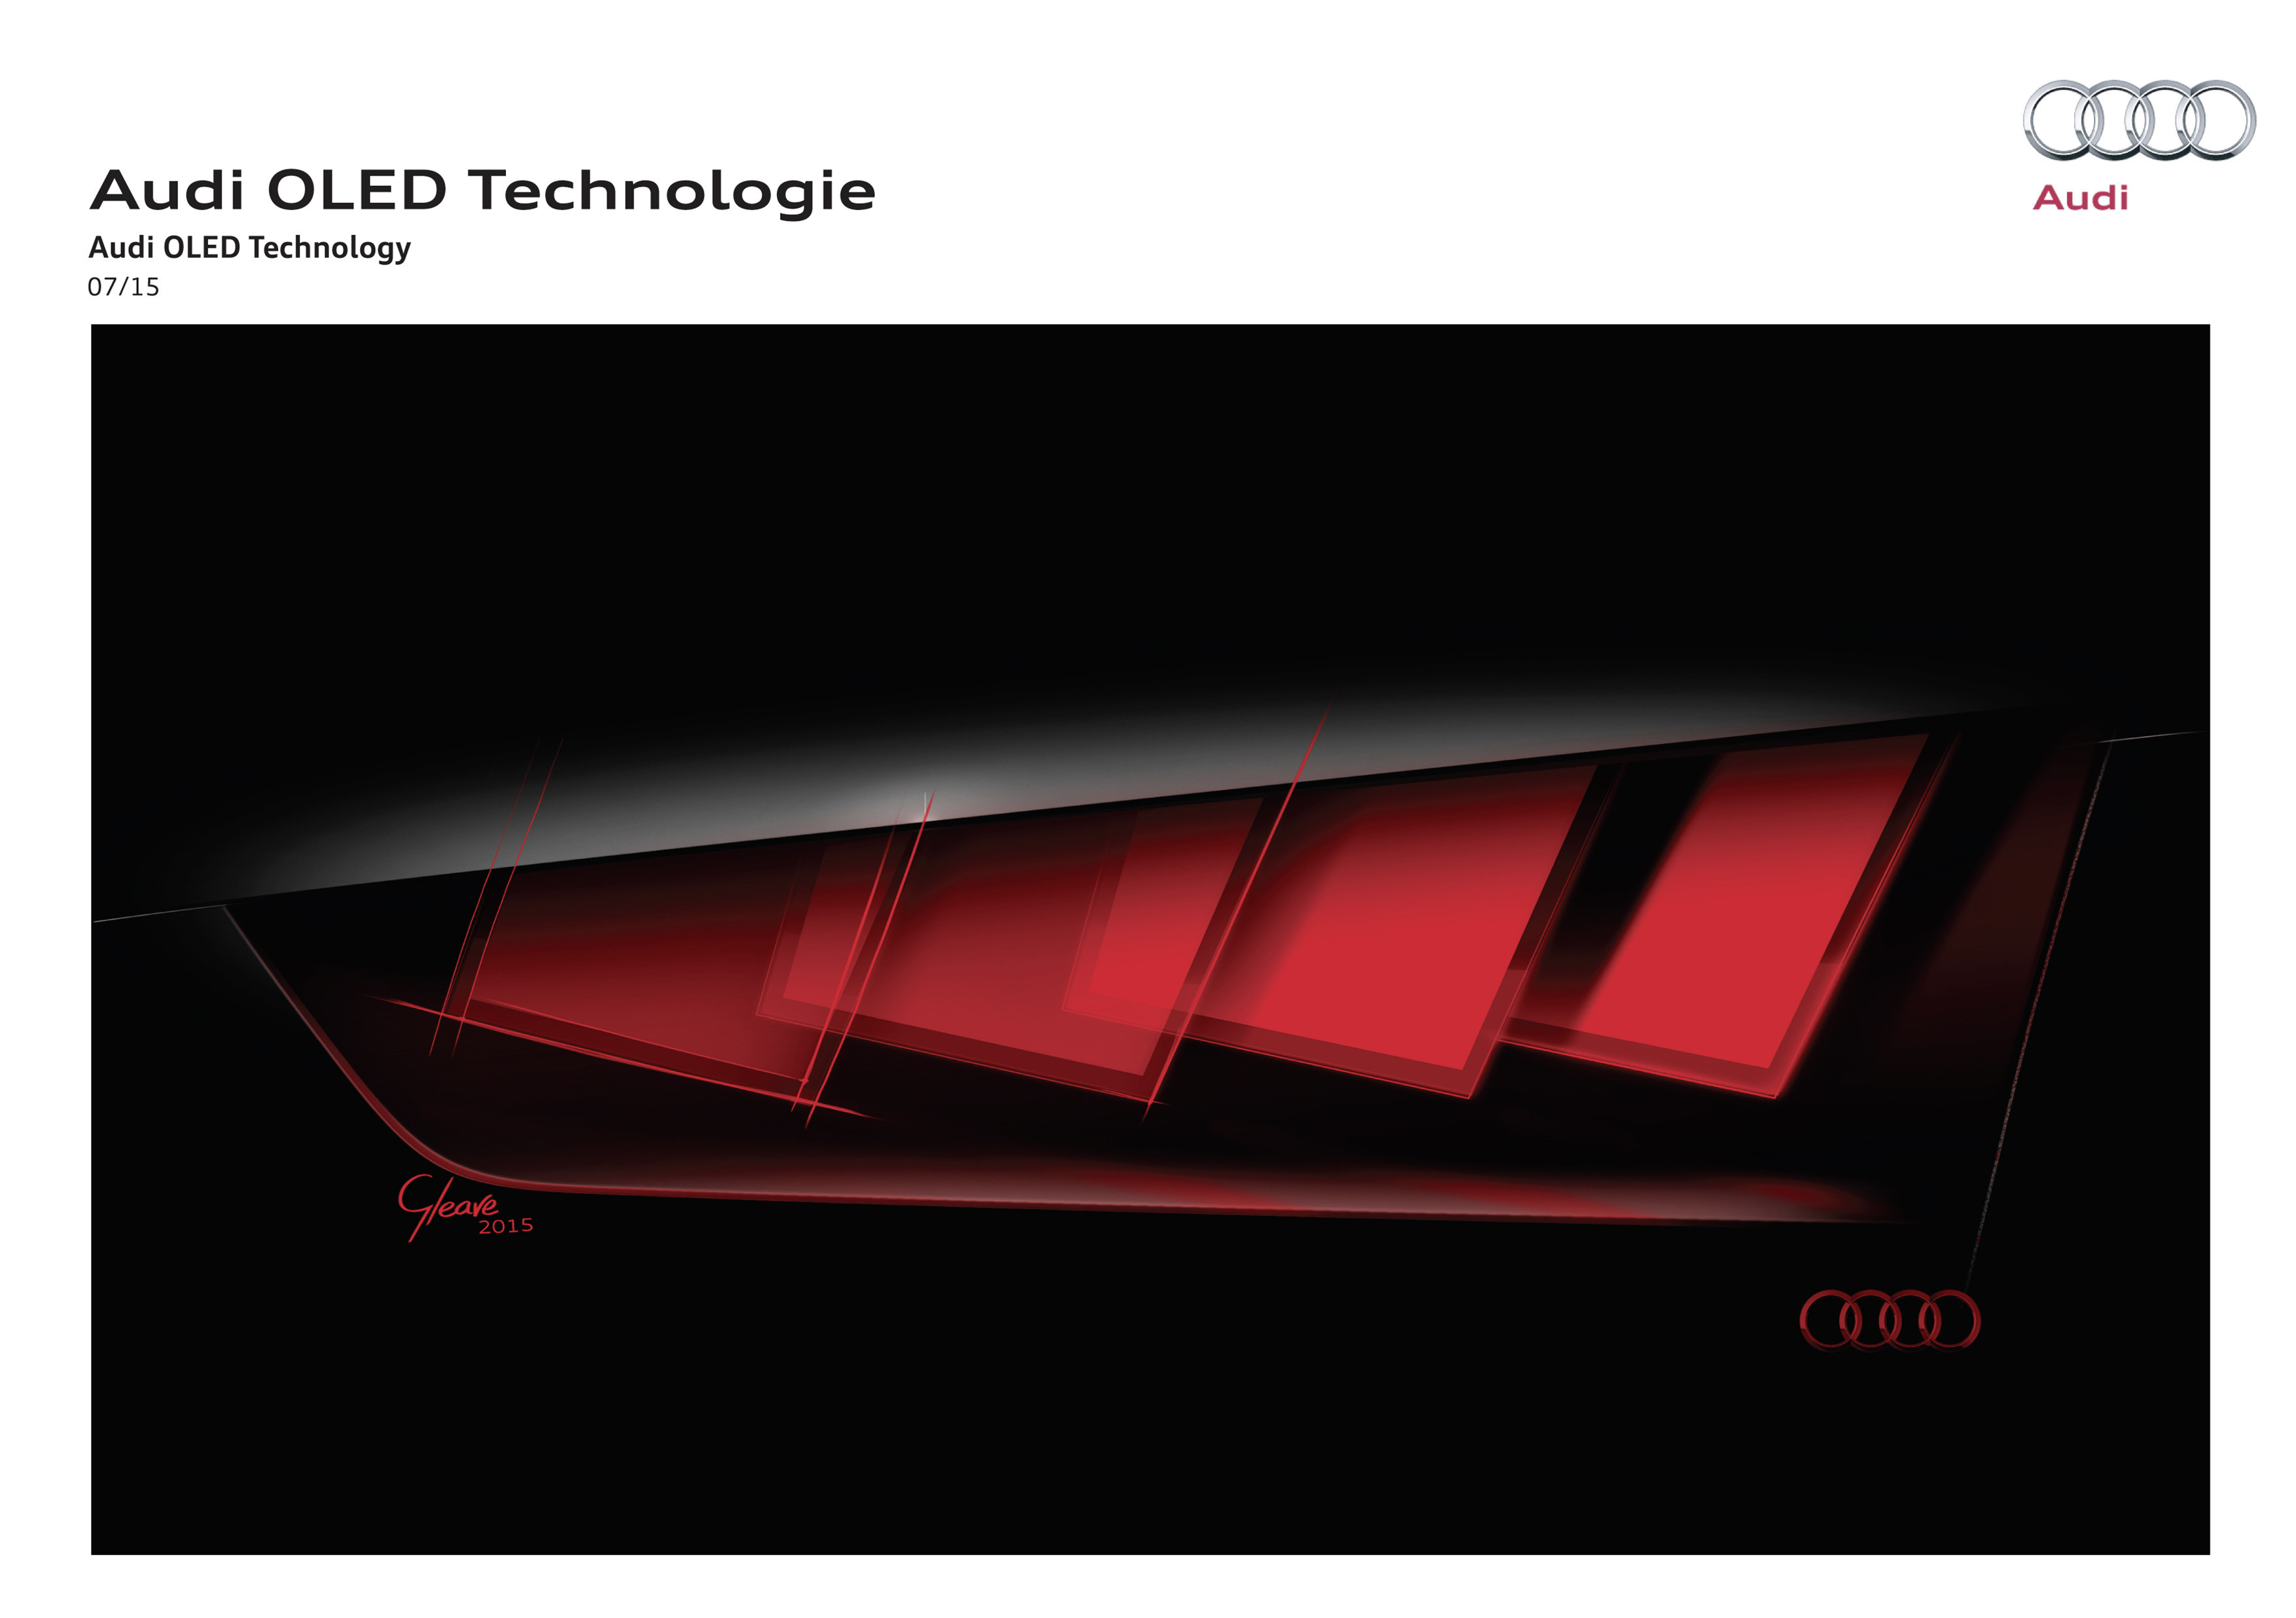 Audi OLED technology to debut at 2015 IAA Frankfurt 2